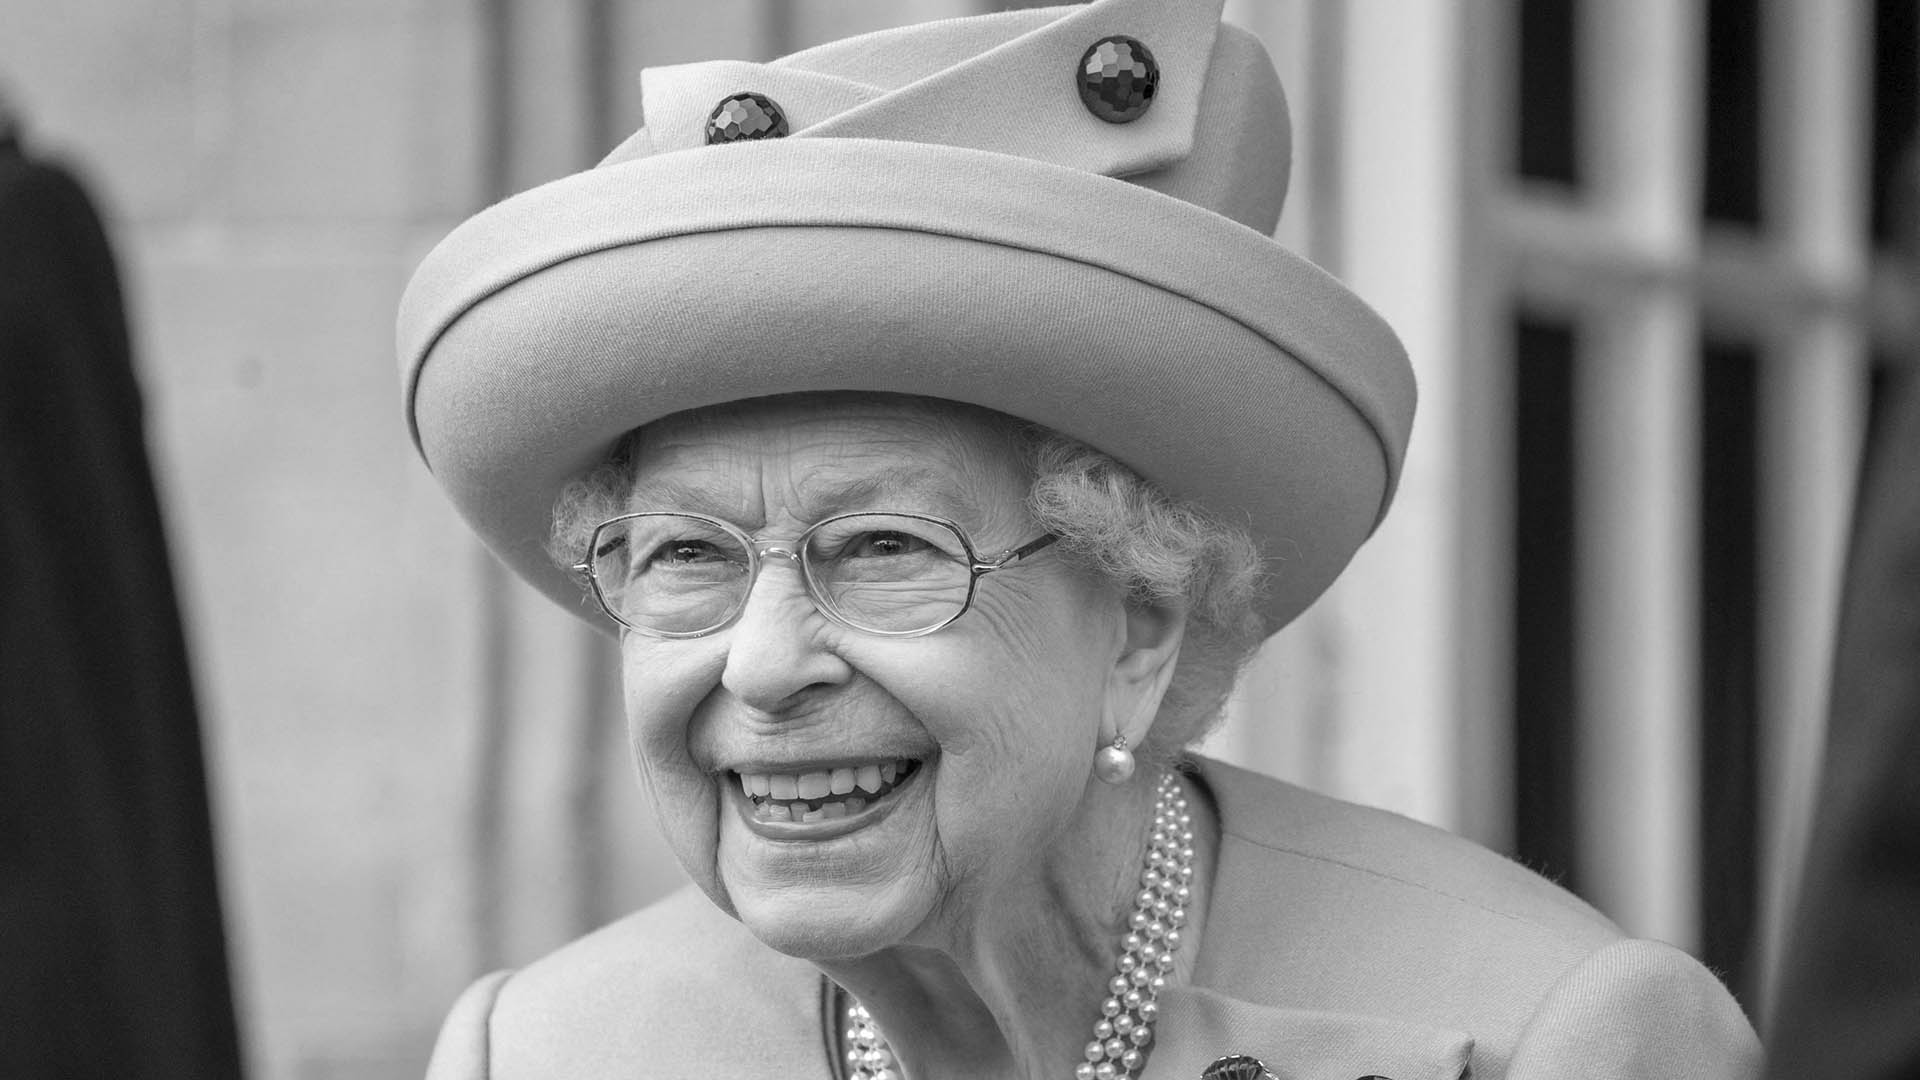 Great Britain: Queen Elizabeth II has died